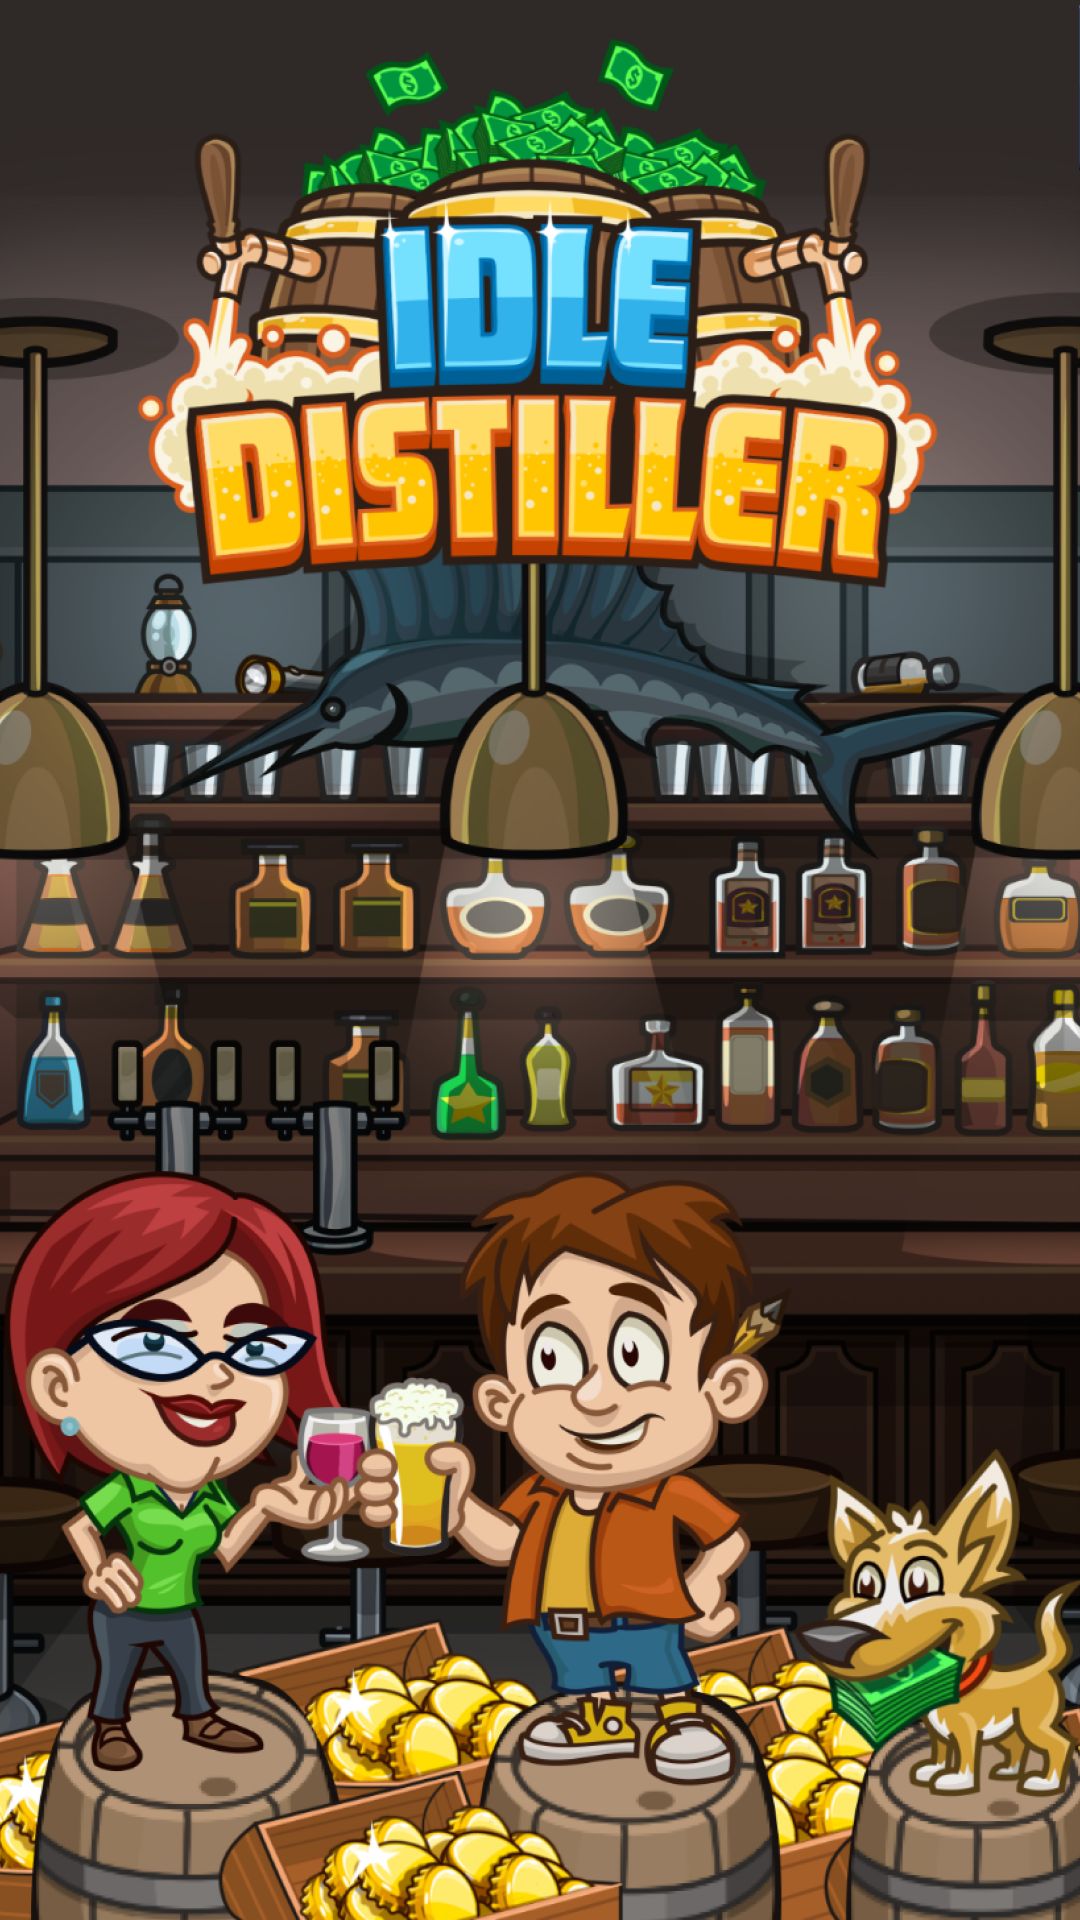 Télécharger Idle Distiller - A Business Tycoon Game pour Android gratuit.